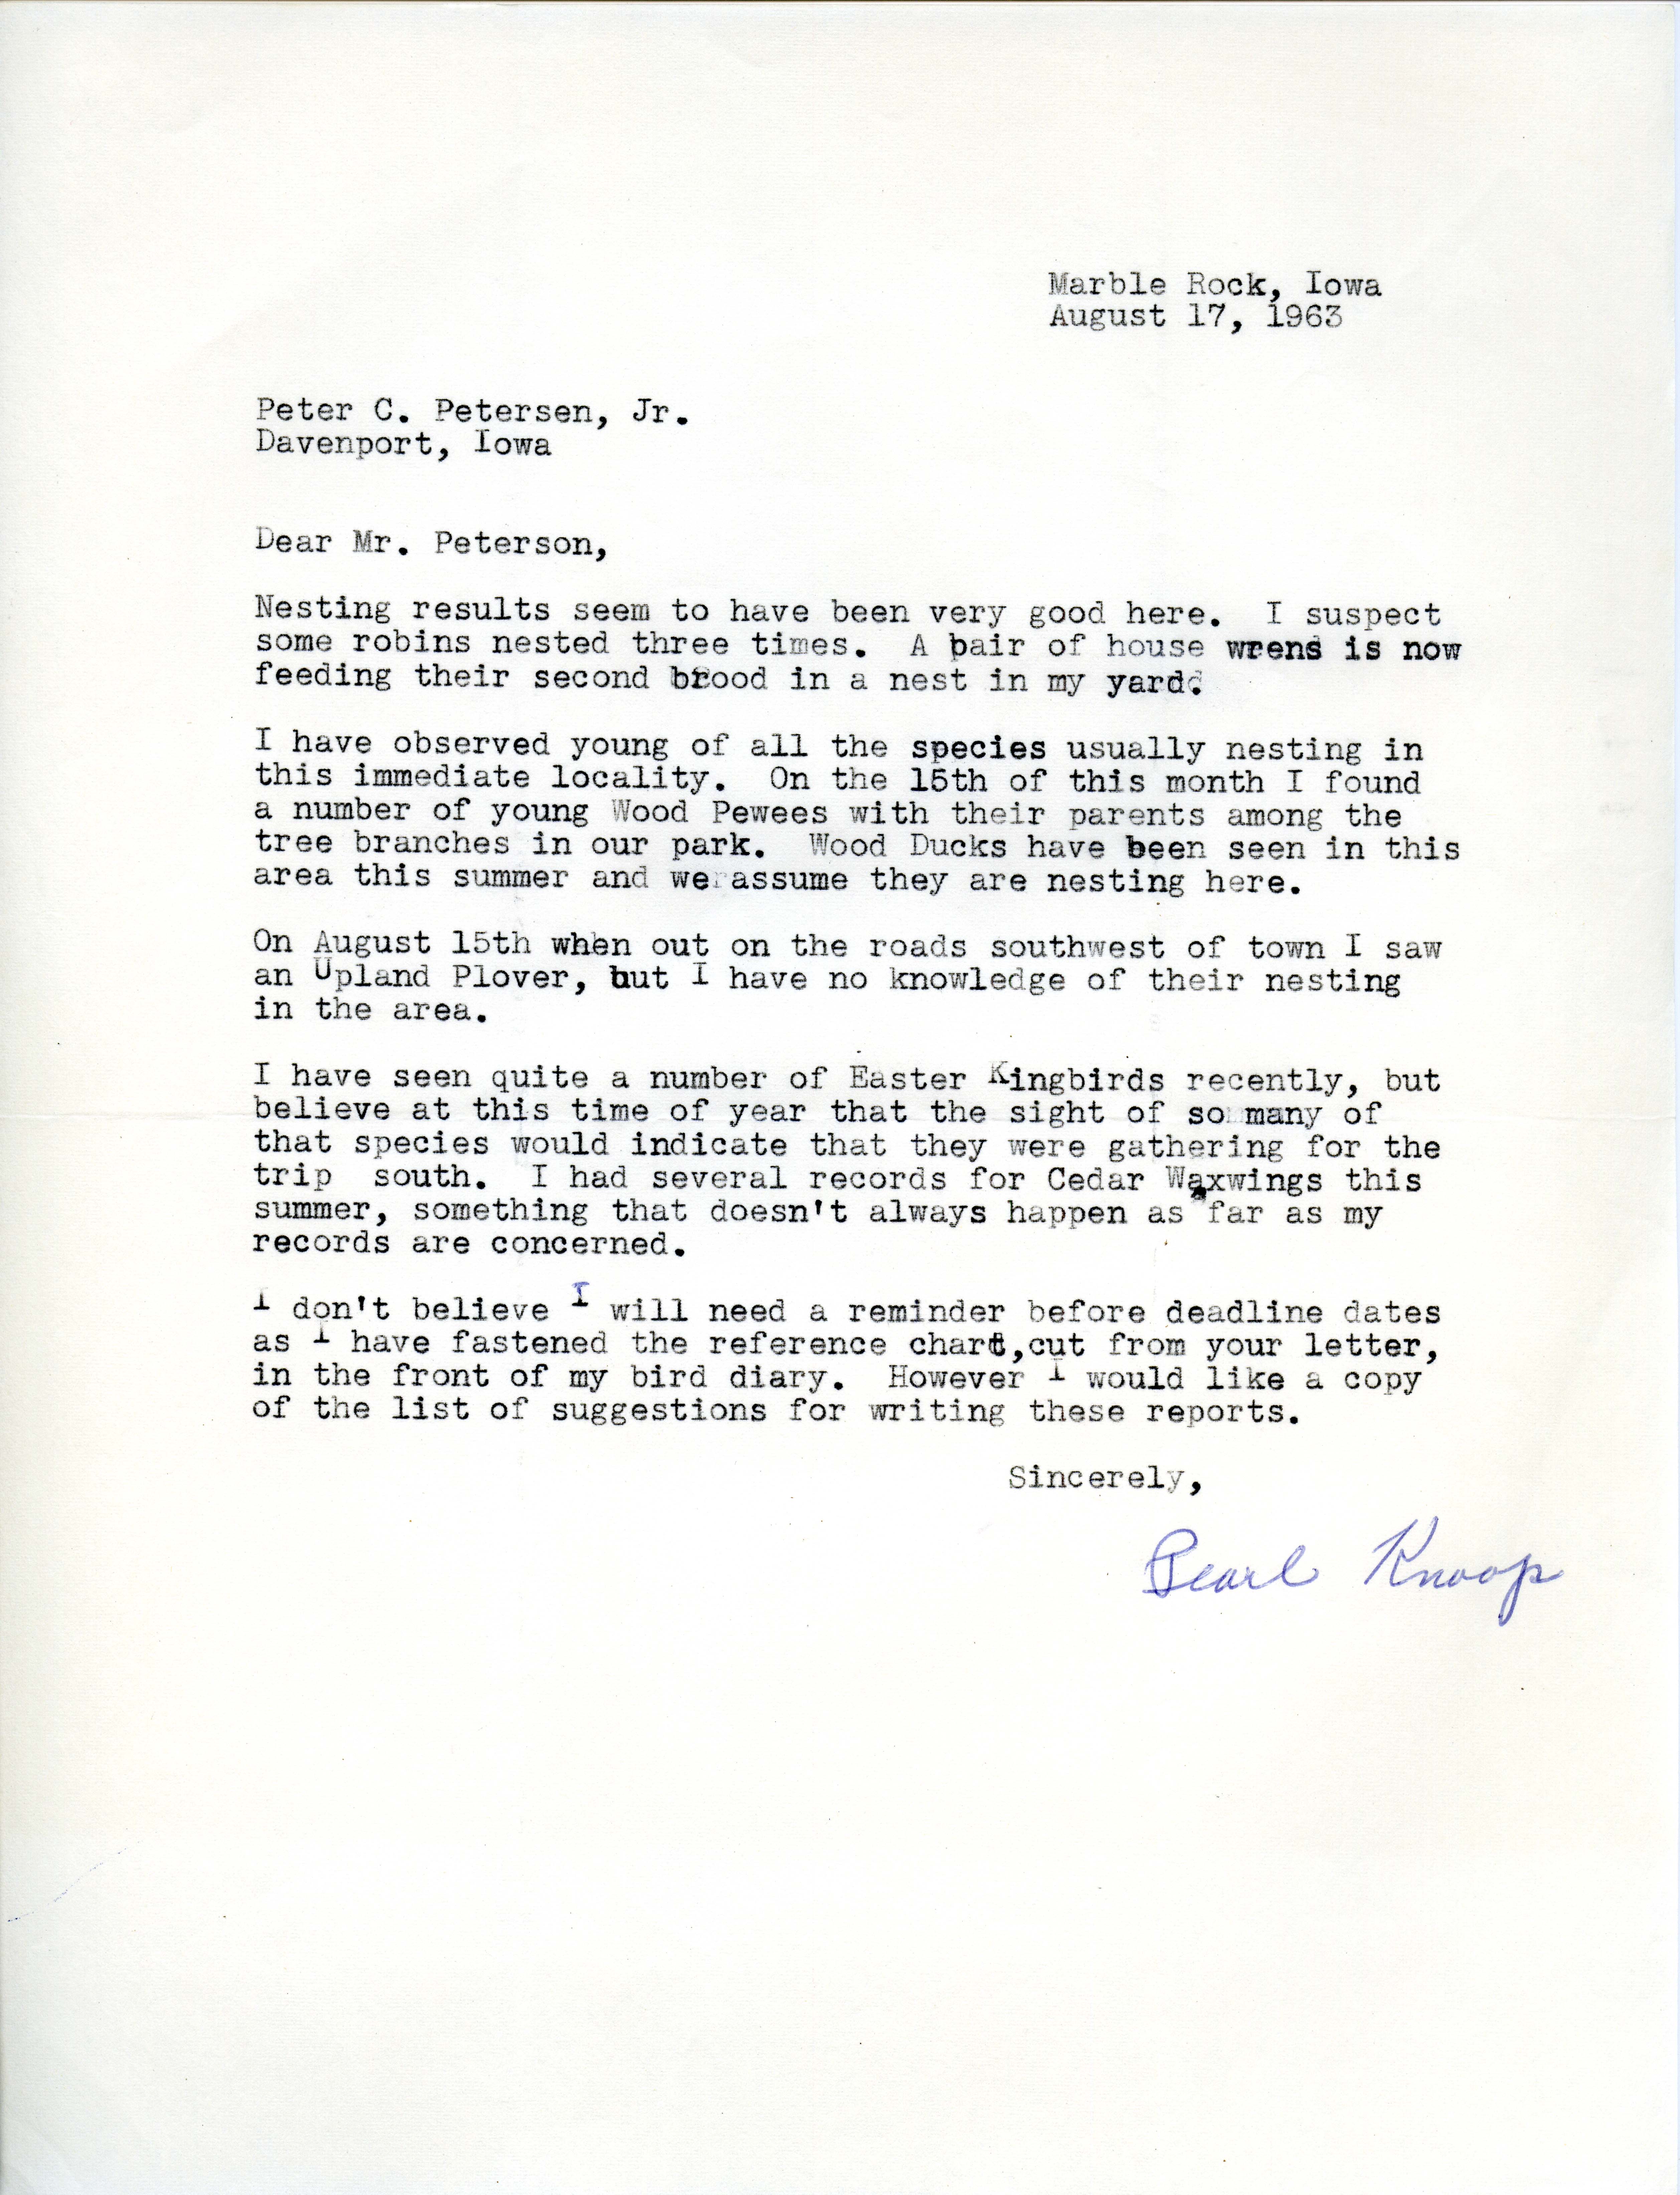 Pearl Knoop letter to Peter C. Petersen regarding fall migration, August 17, 1963 